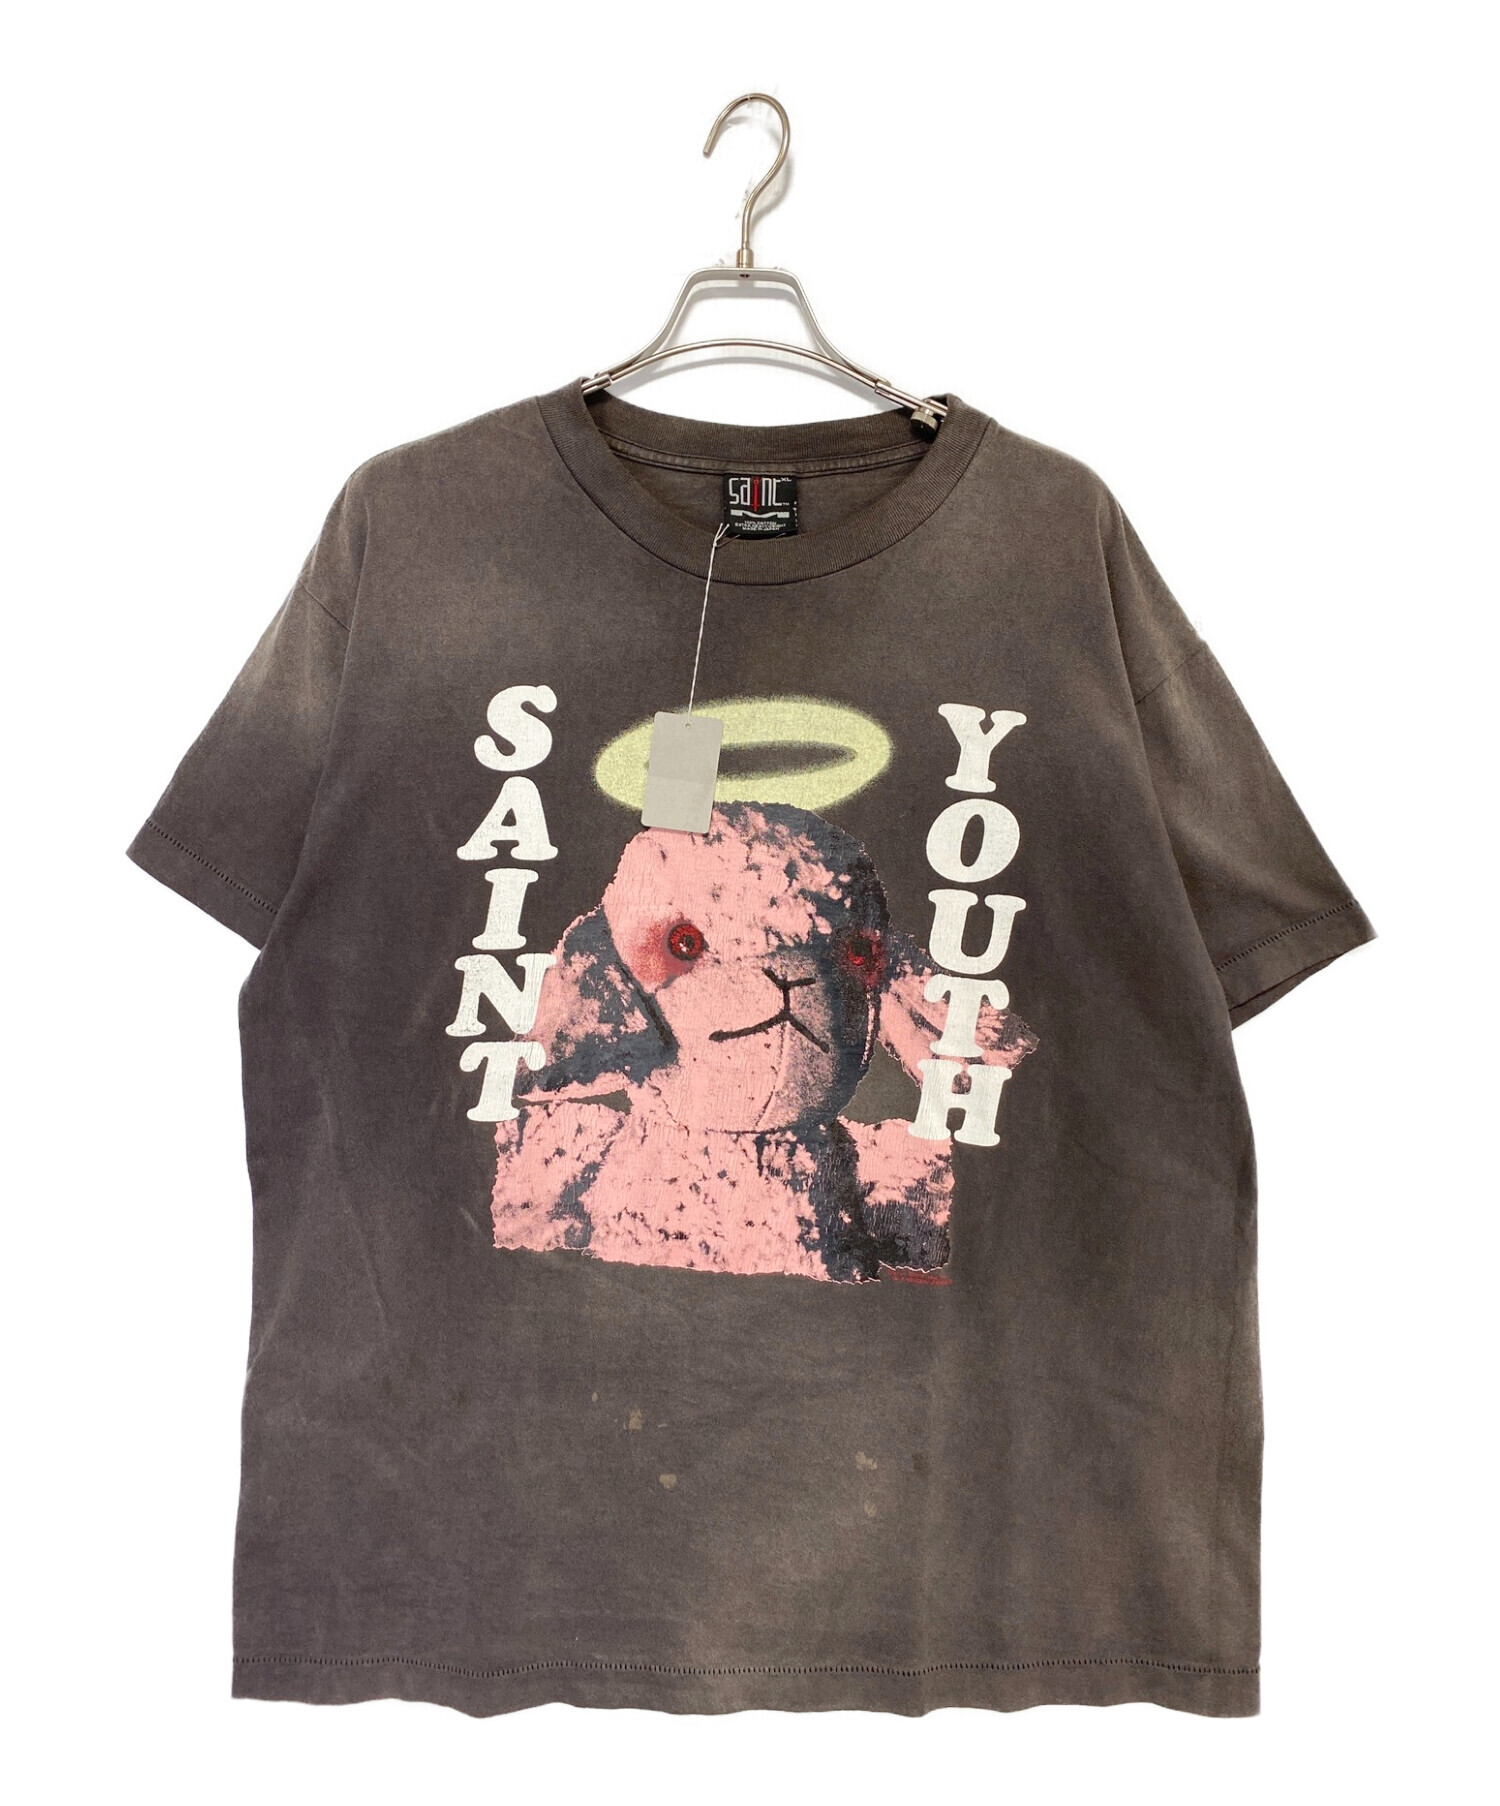 SAINT Mxxxxxx PINKSHEEP Tシャツ セントマイケル